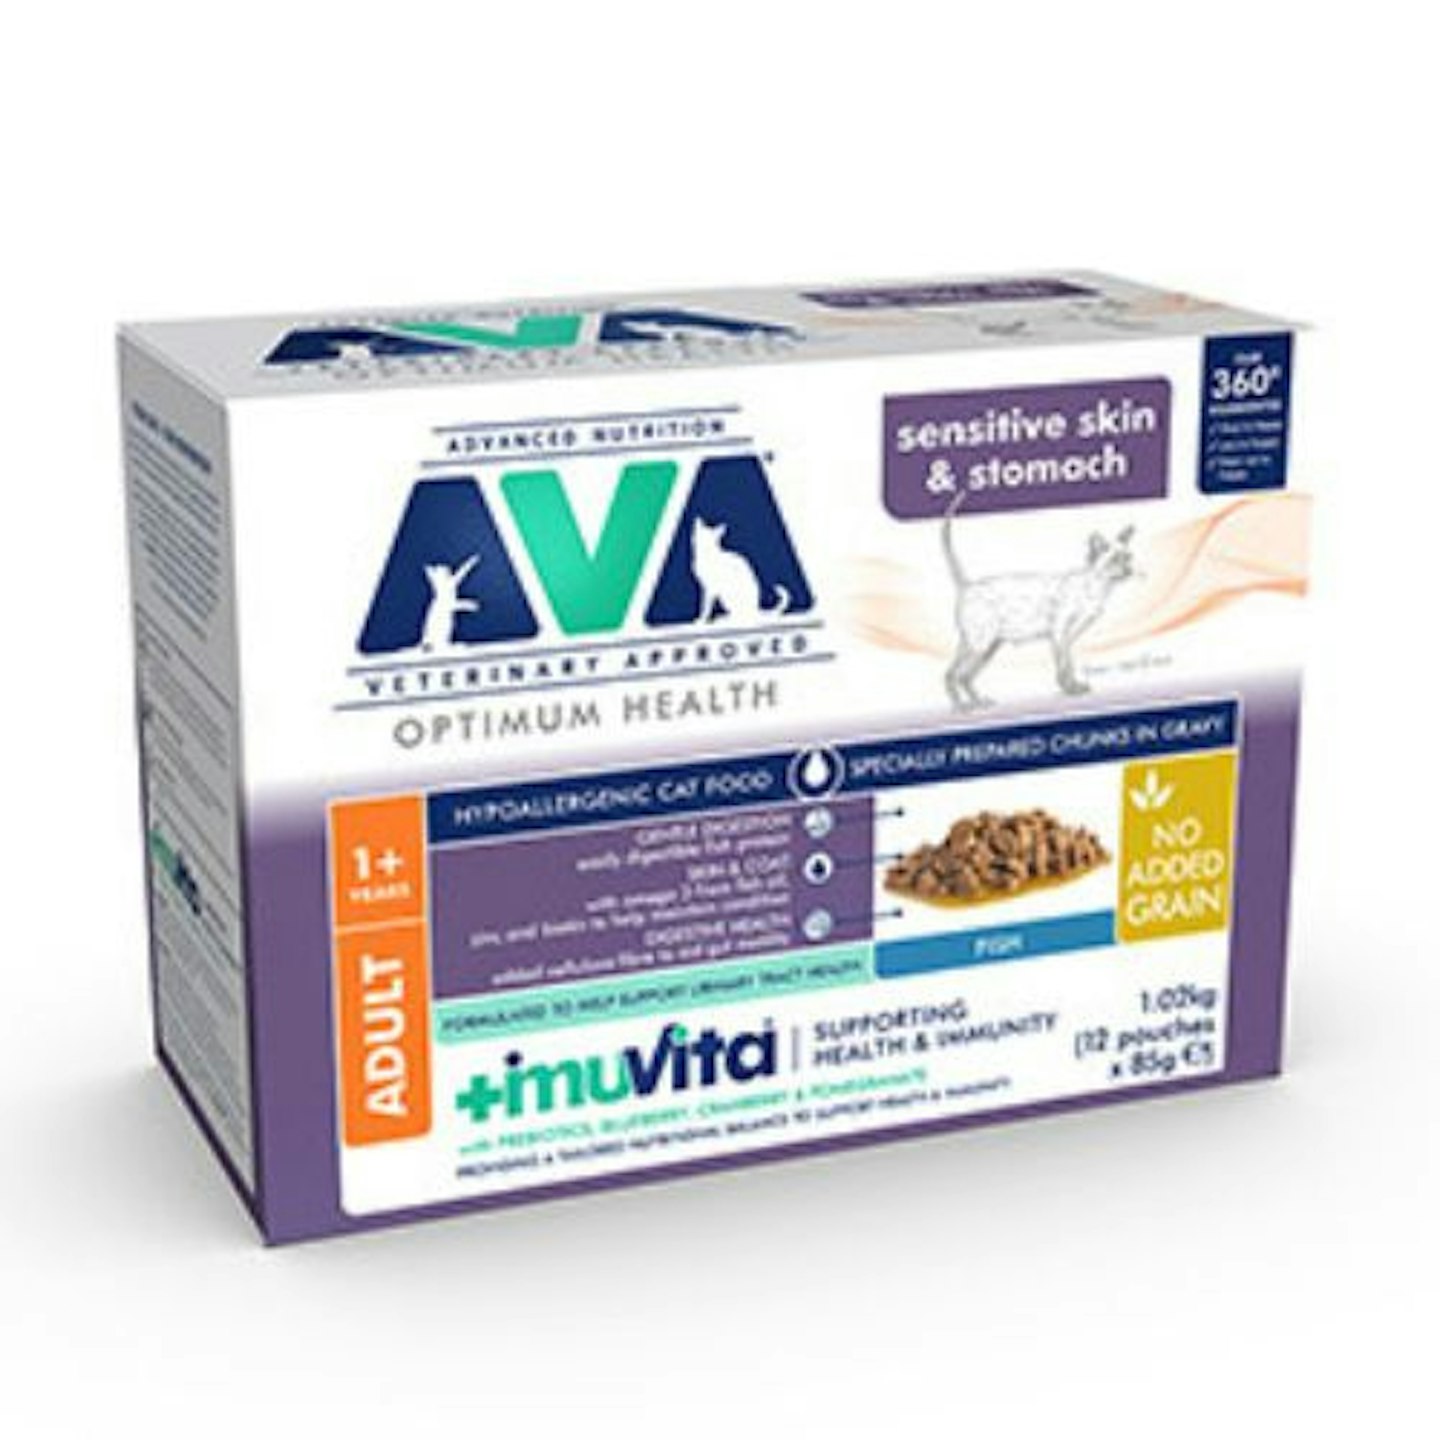 AVA Veterinary Approved Optimum Health 1+ Sensitive Wet Adult Cat Food